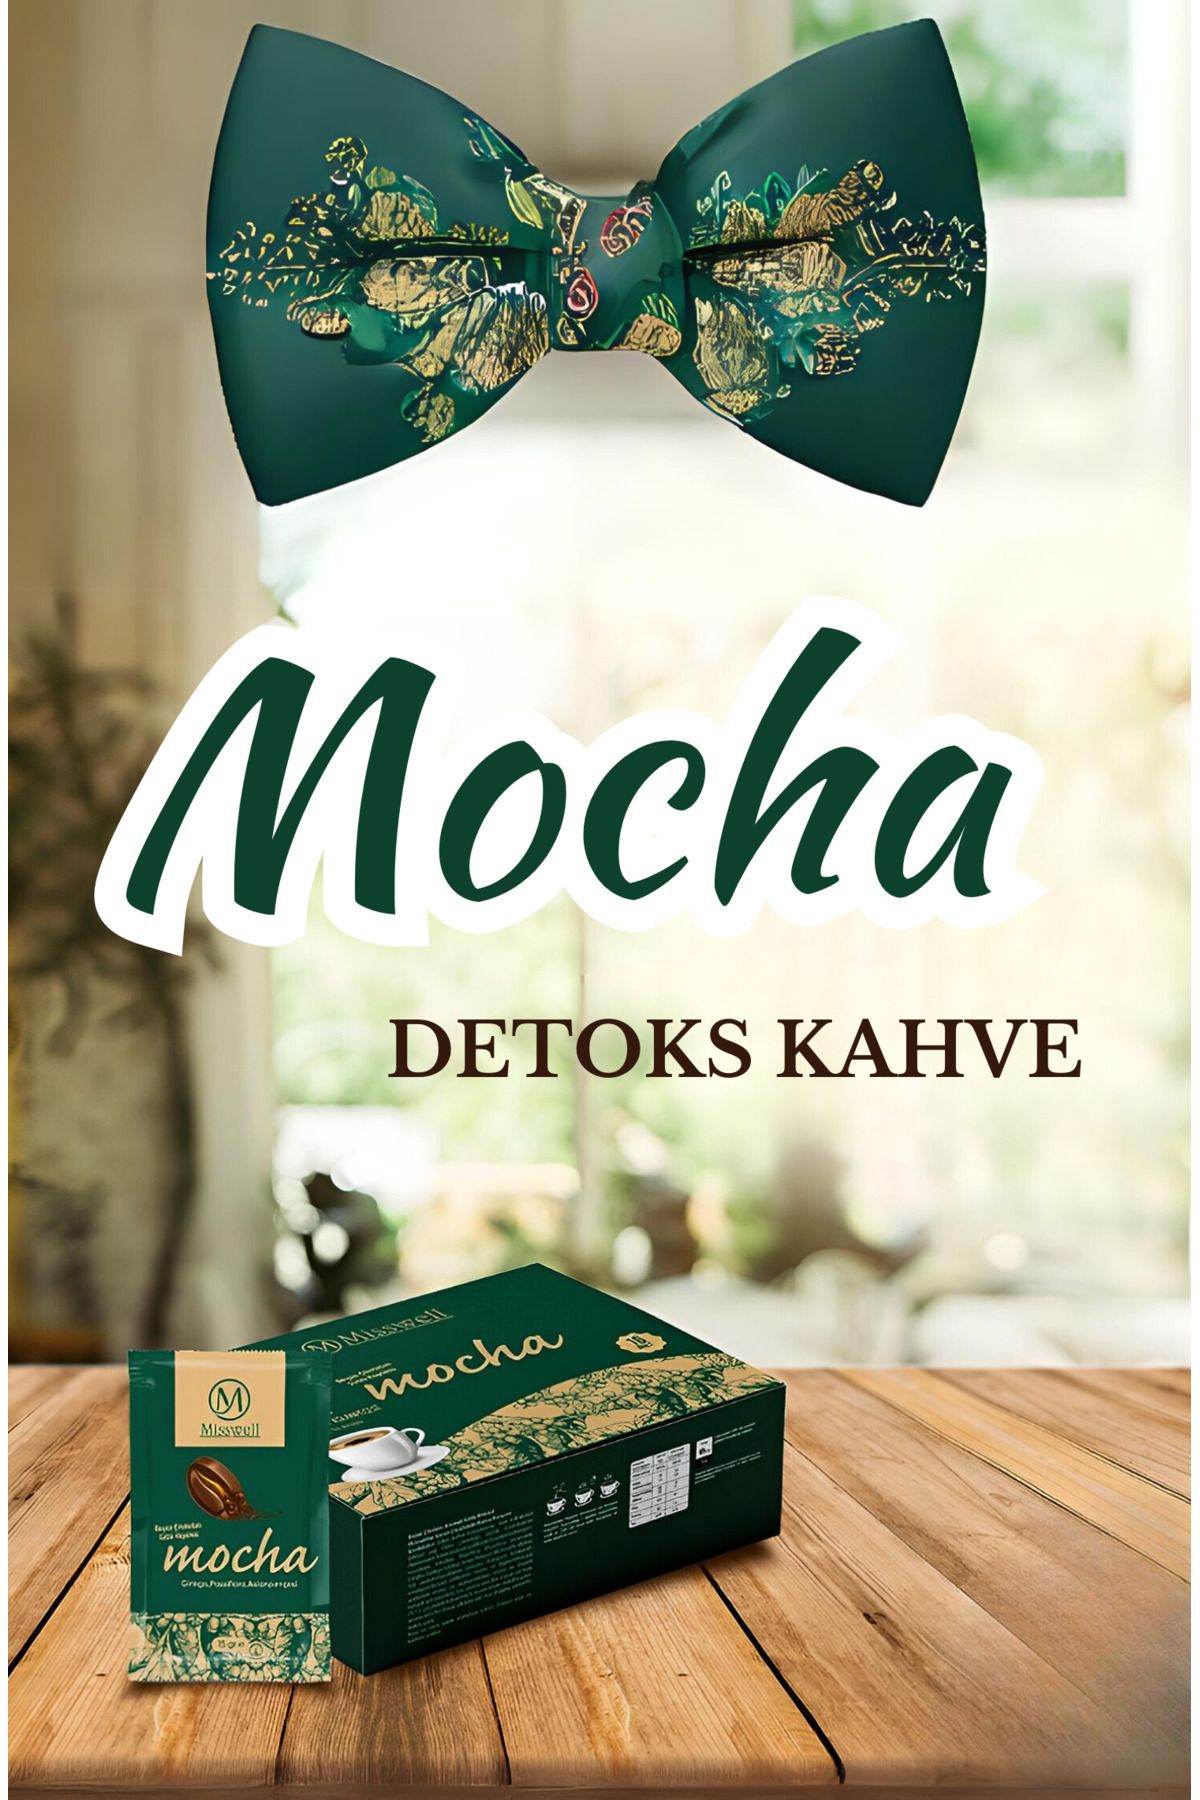 MİSSWELL Mocha Kahve, Detoks Kahve